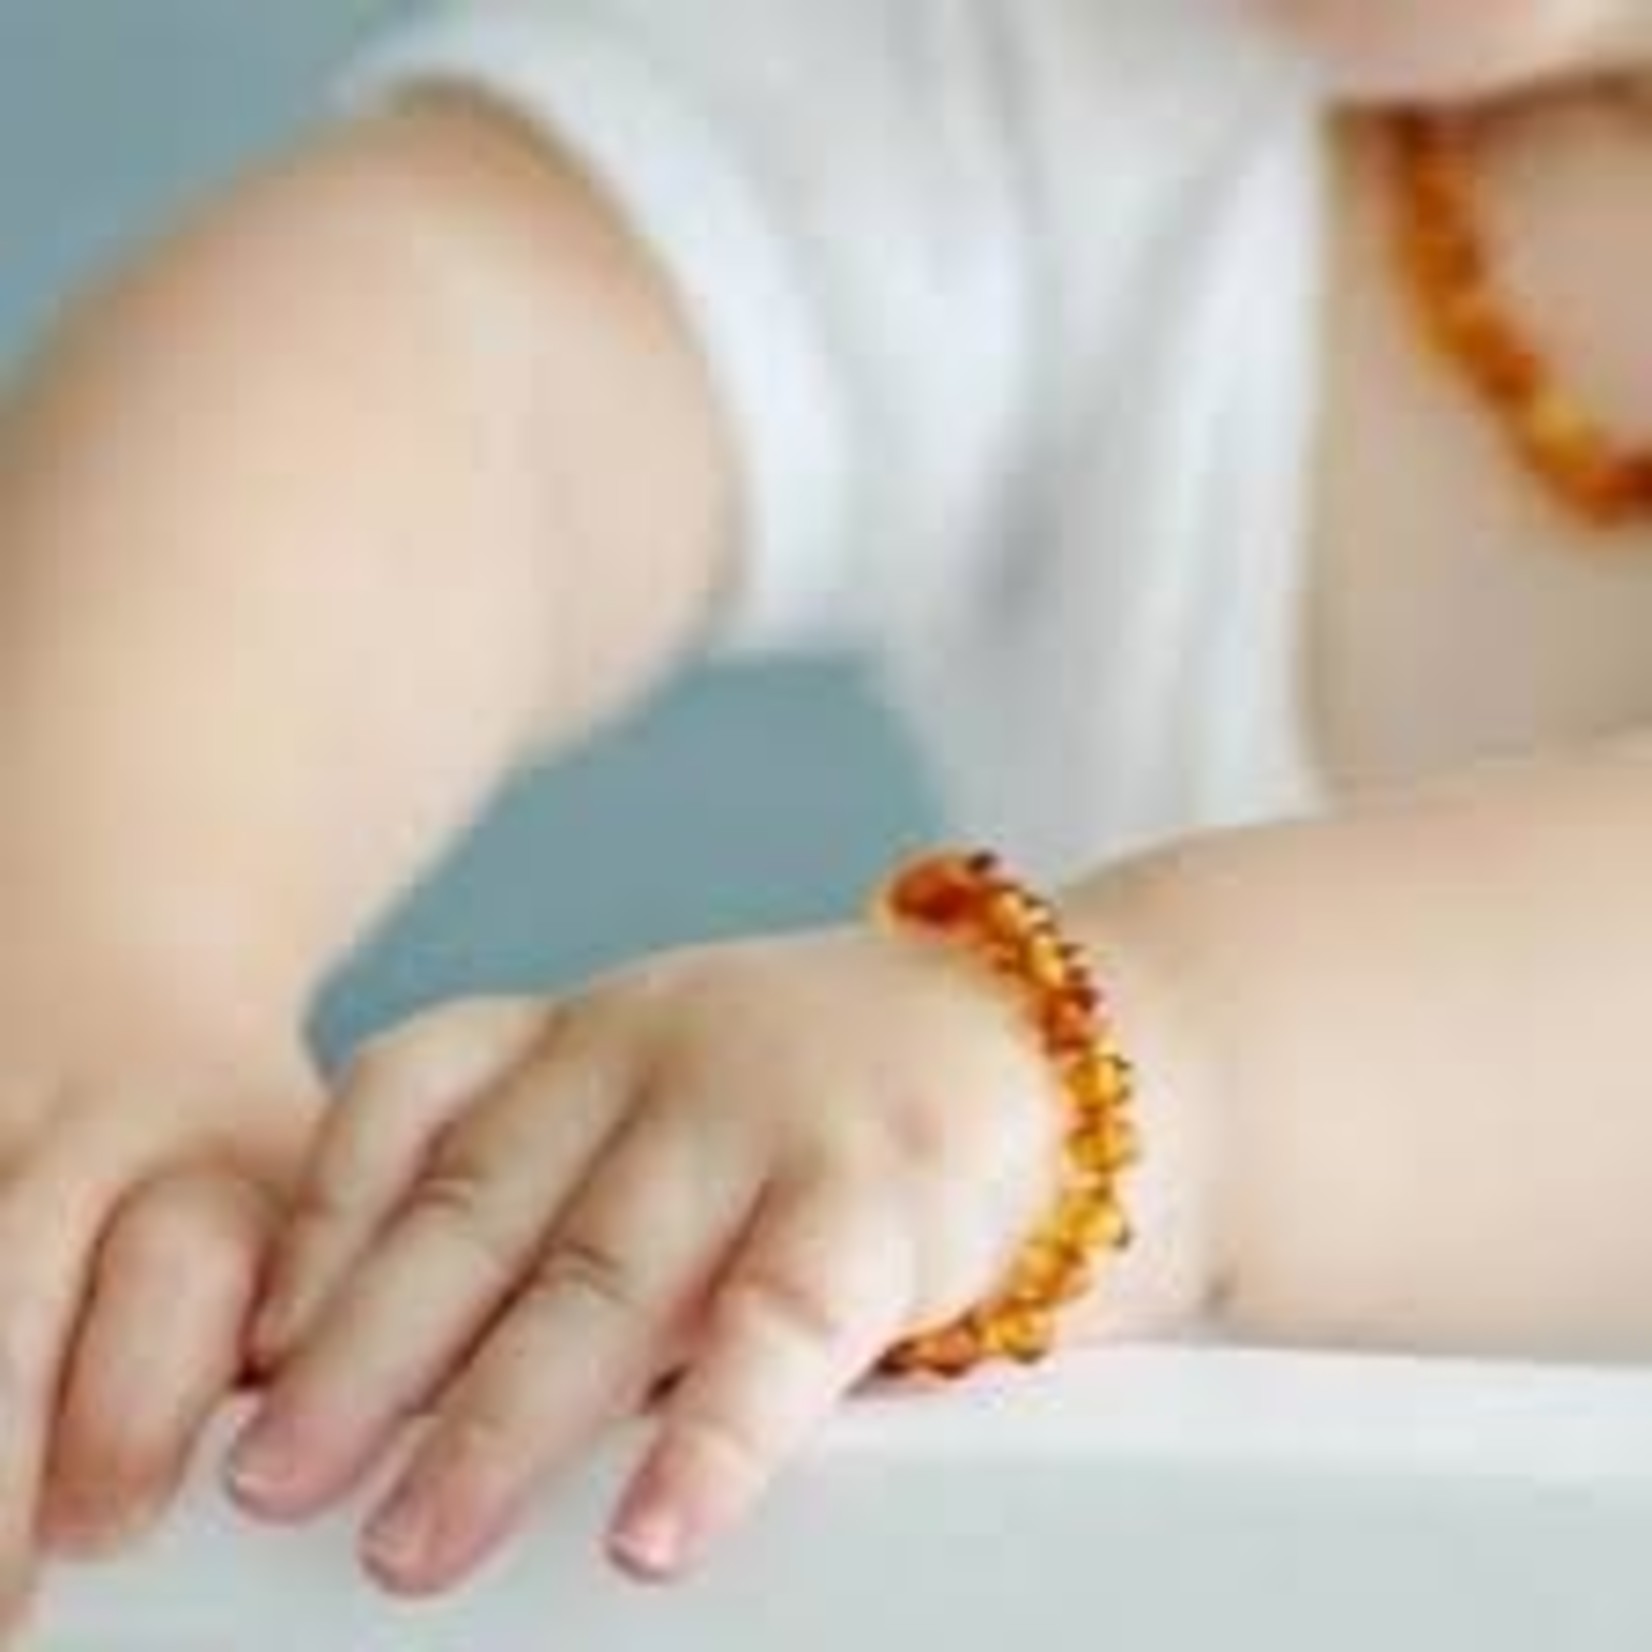 Nature’s child Nature’s child amber bracelet/anklet